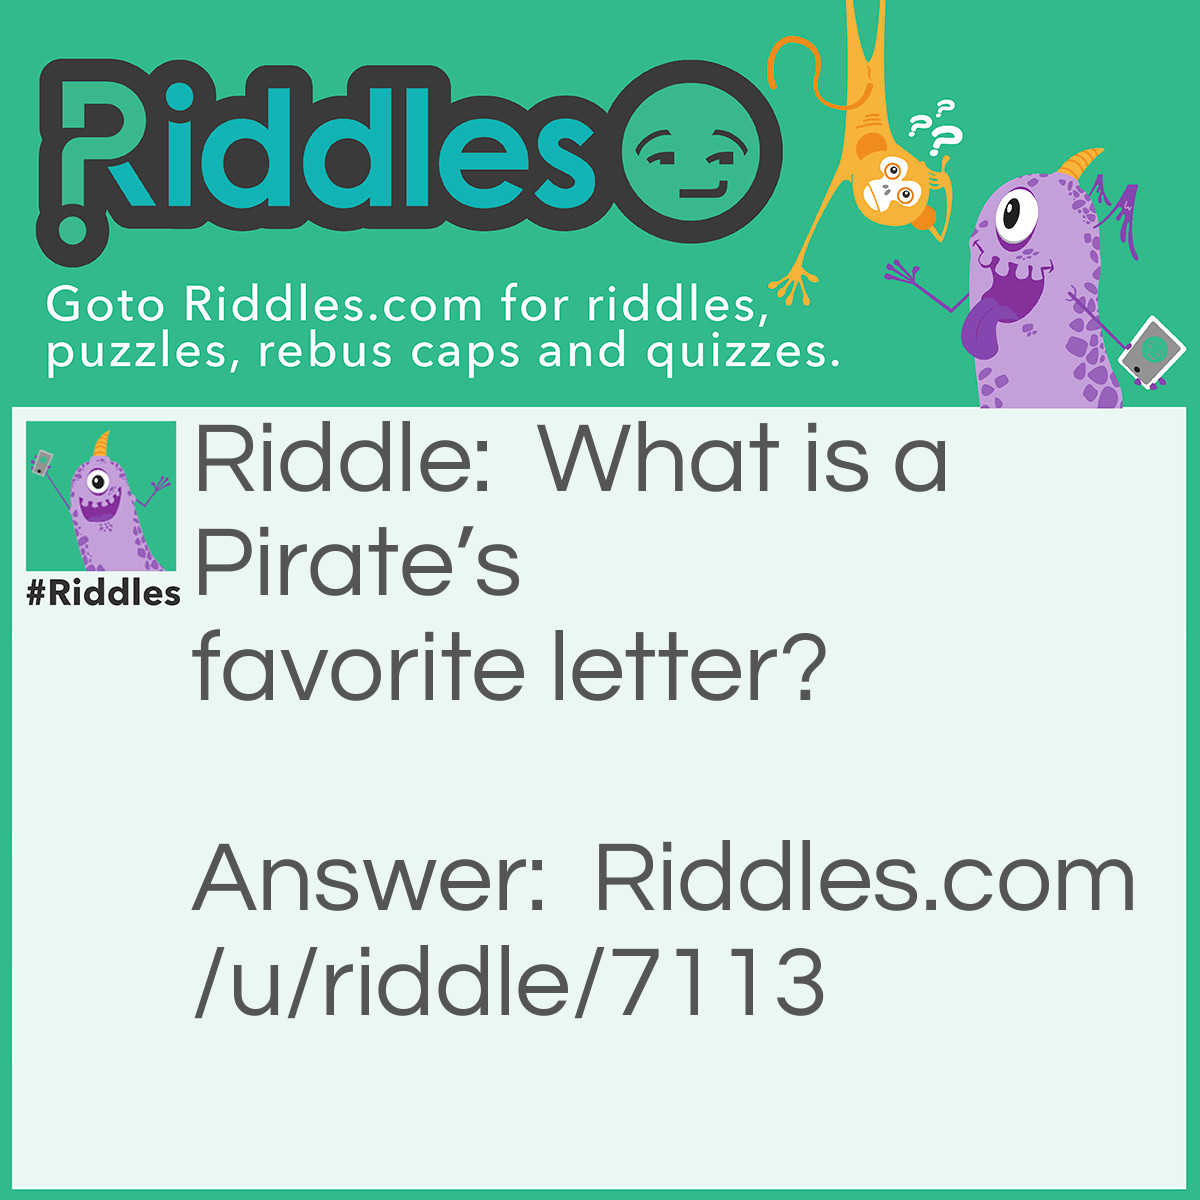 Riddle: What is a Pirate's favorite letter? Answer: aRRRRRRRRR!